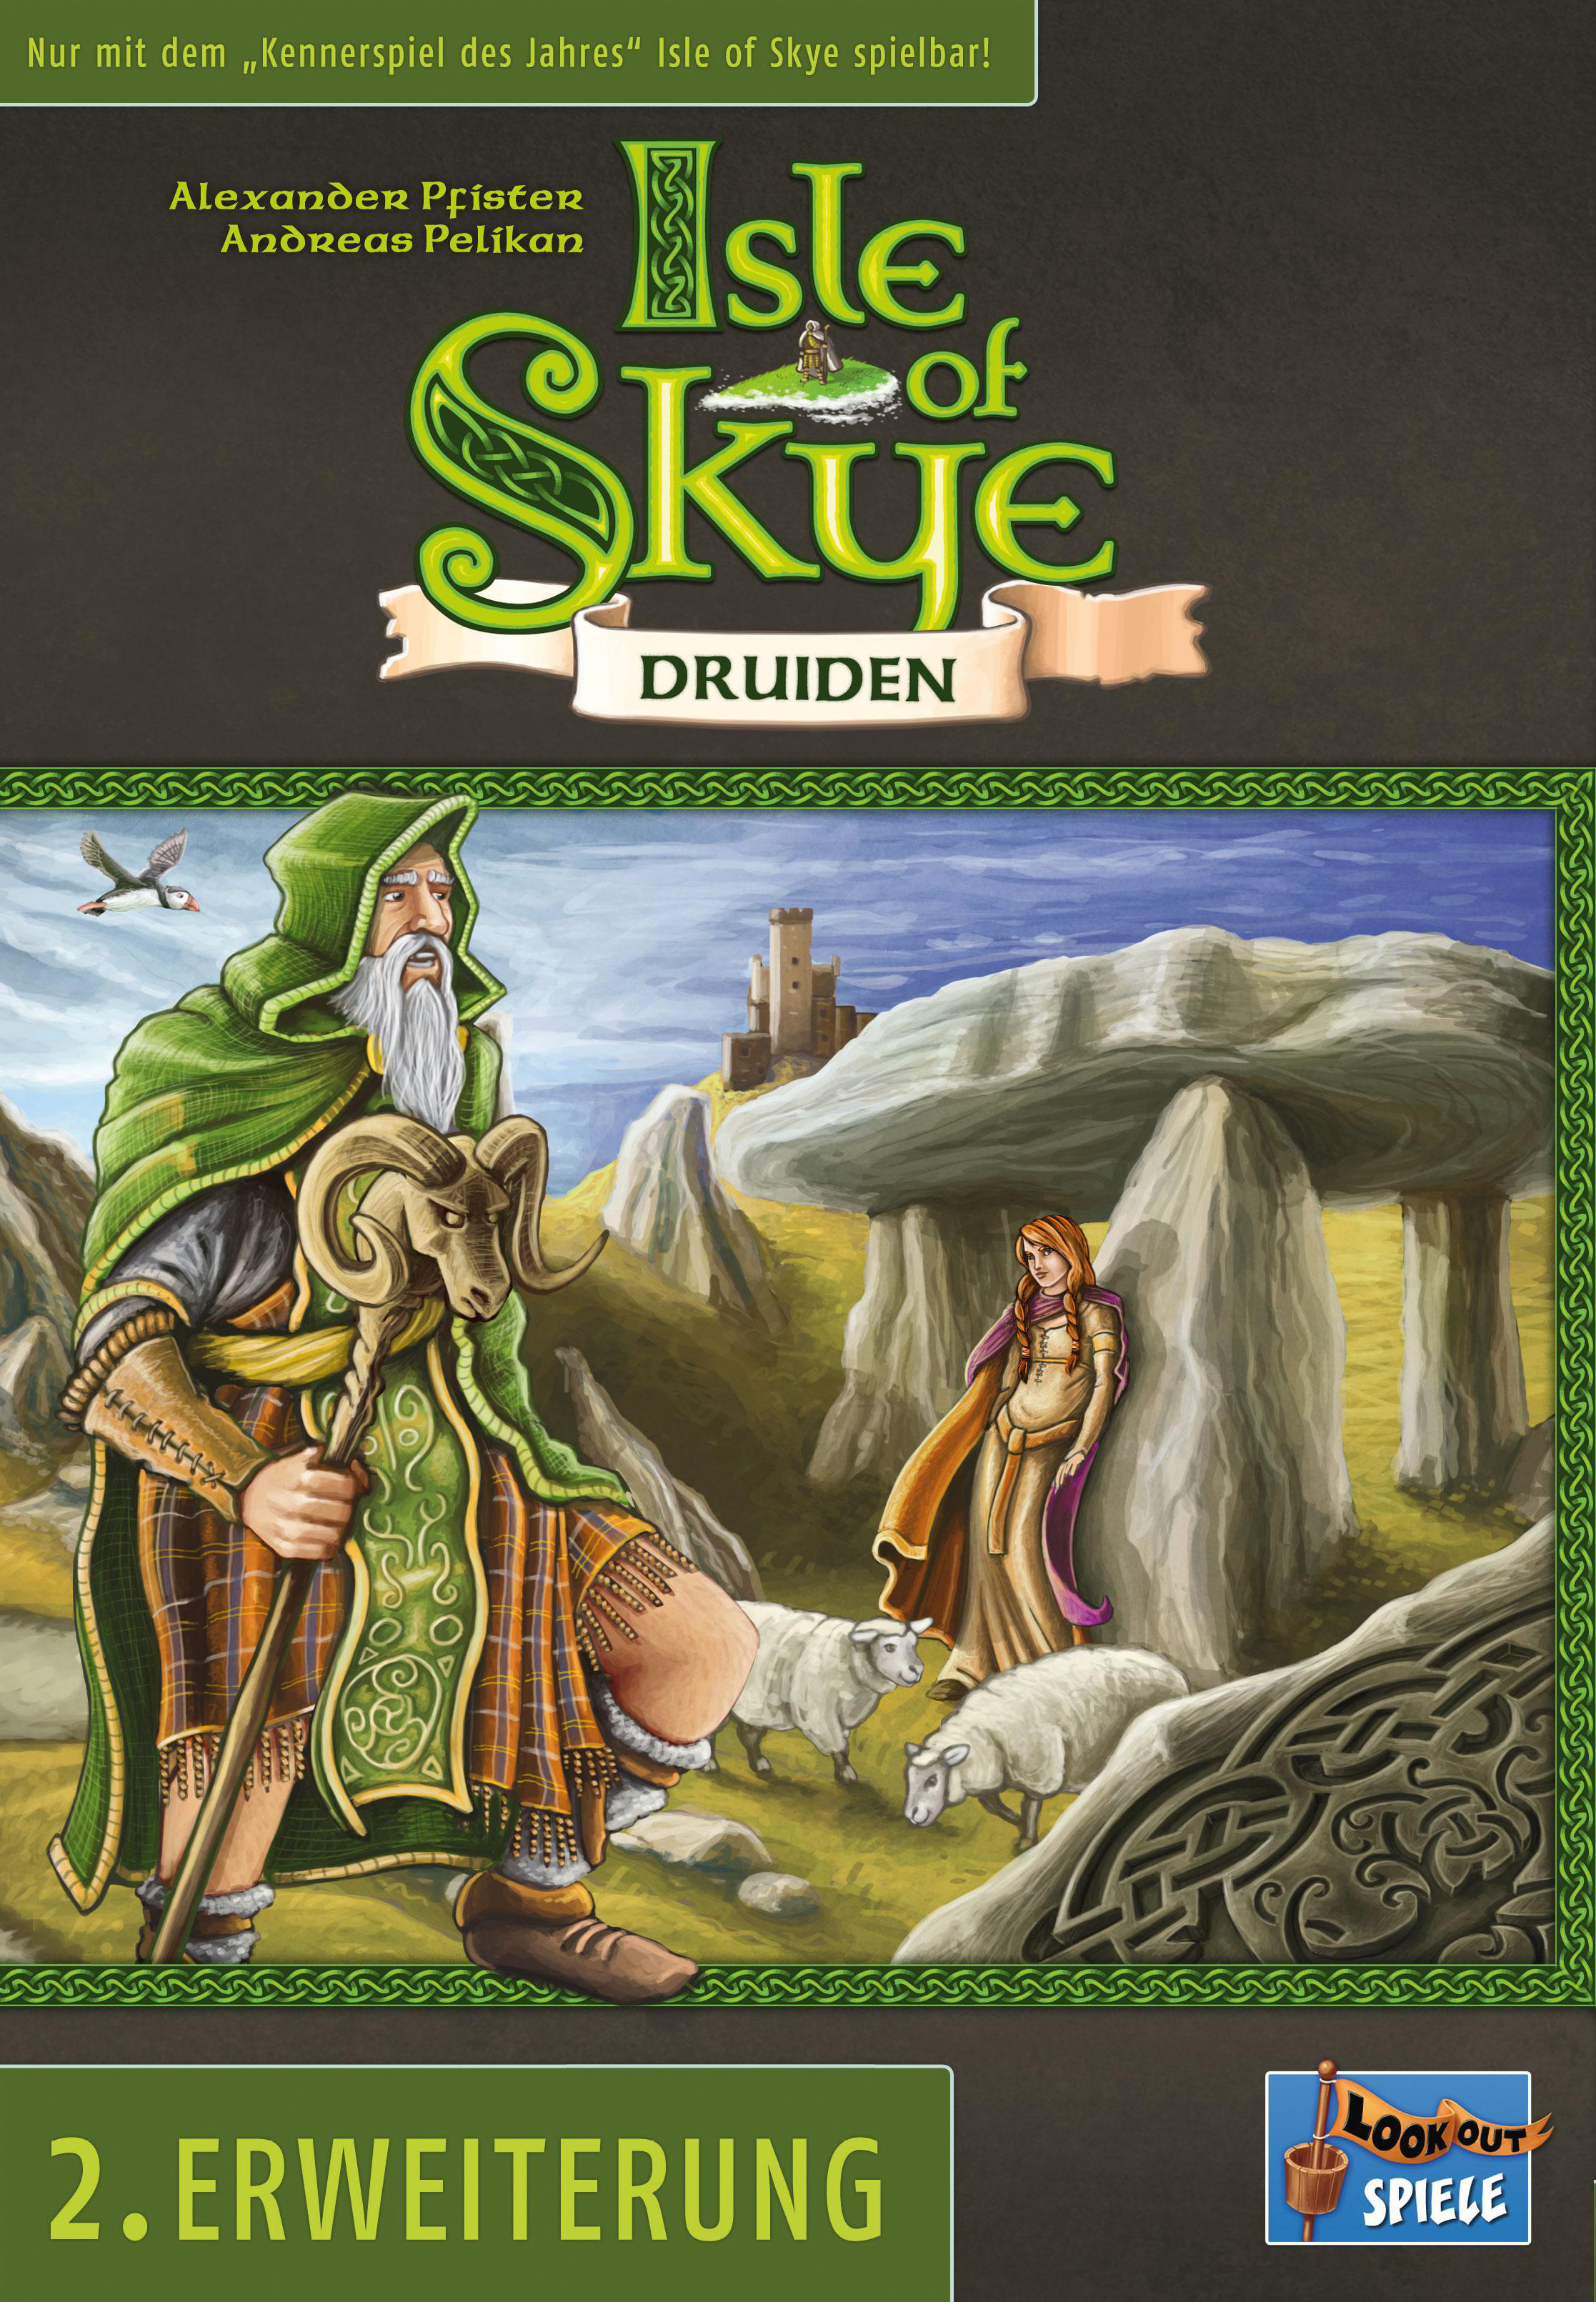 LOOKOUT Isle Skye Druiden Mehrfarbig of - Gesellschaftsspiel